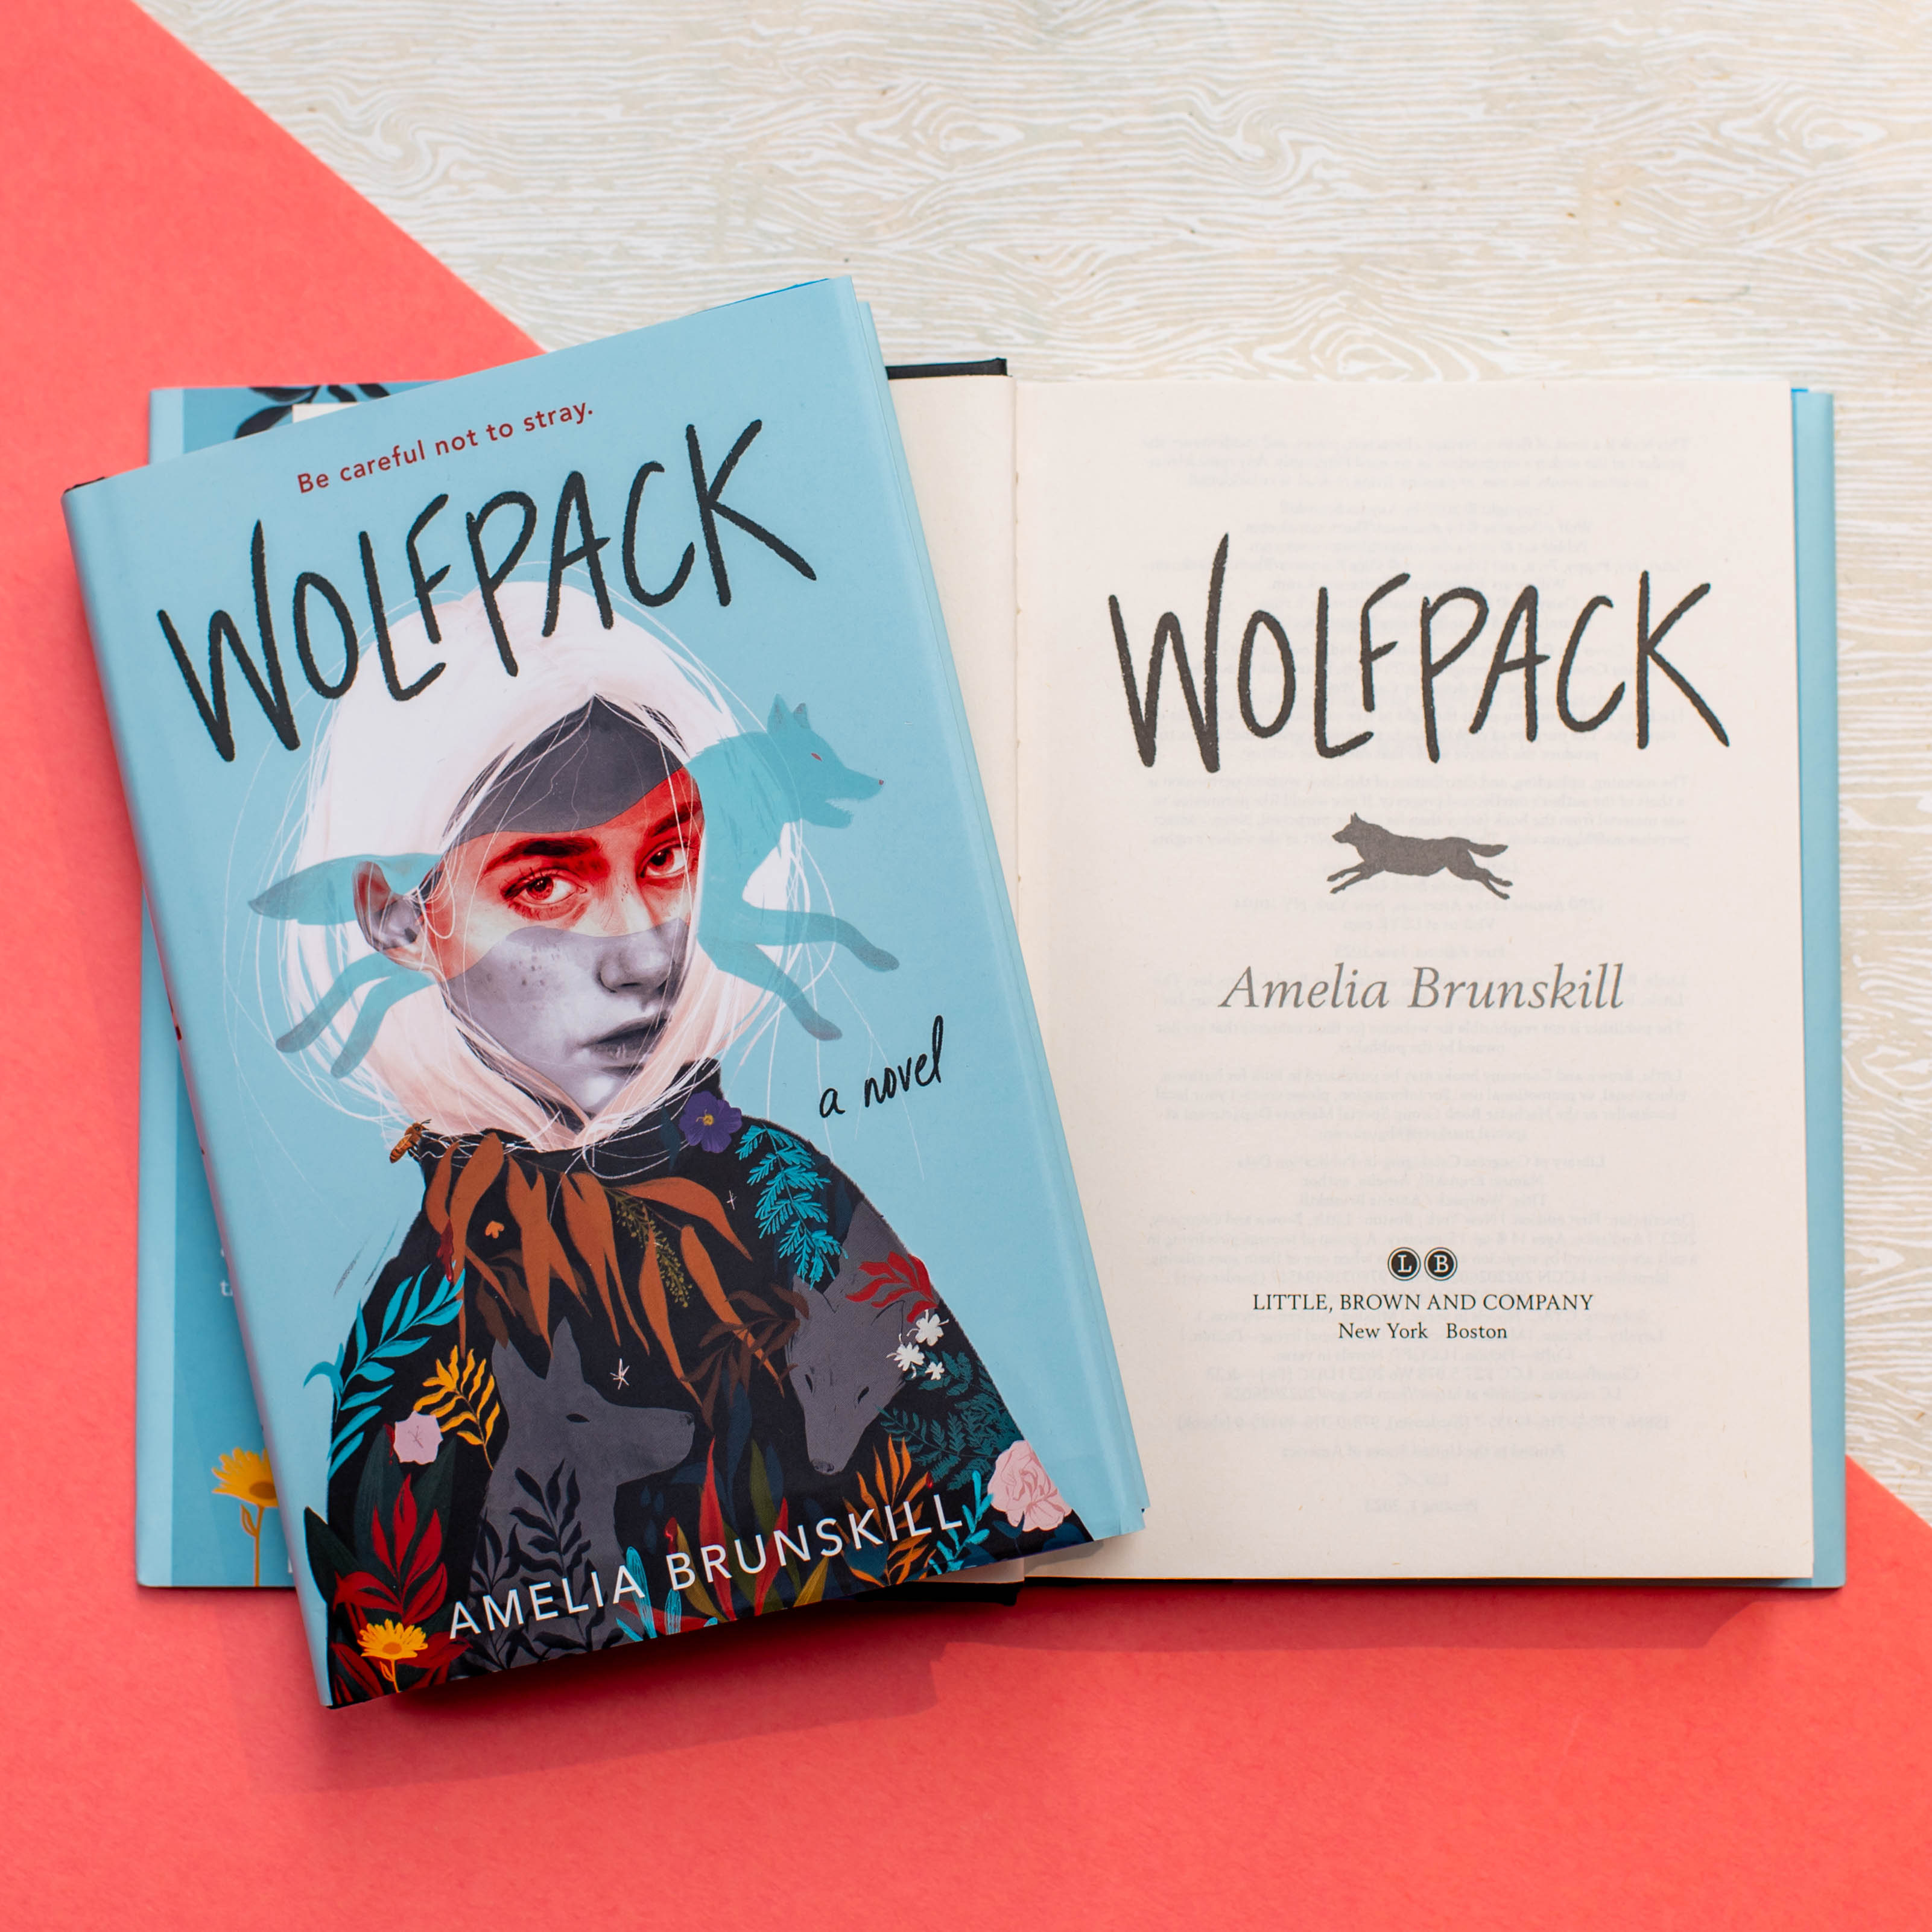 NOVL - Instagram image of the book 'Wolfpack' by Amelia Brunskill